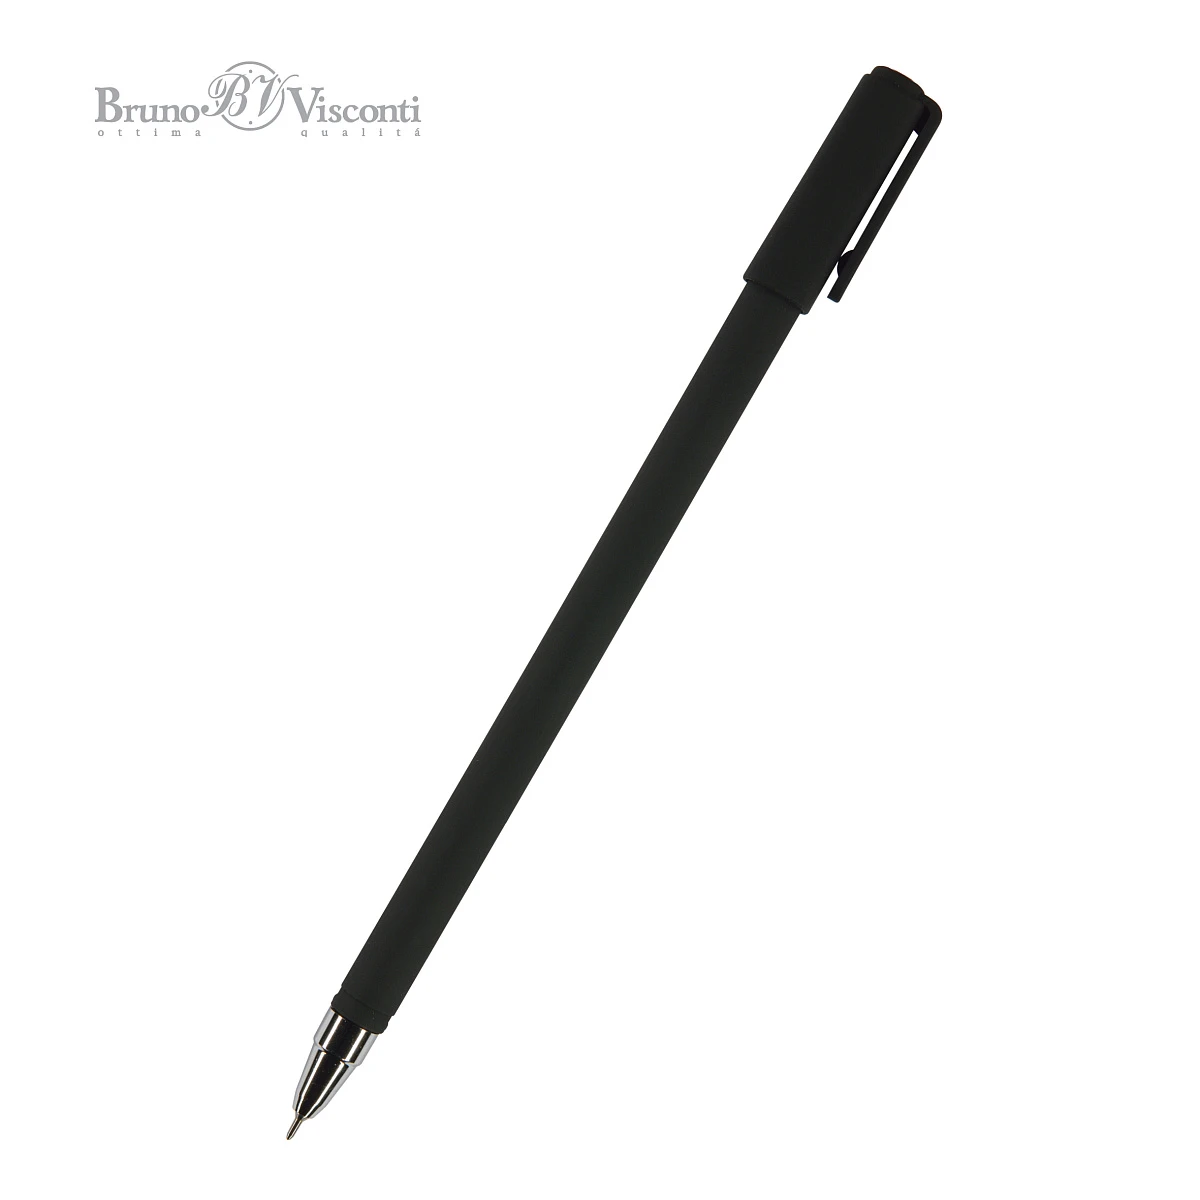 Ручка гелевая под персонализацию Bruno Visconti "SIMPLEWRITE", синяя